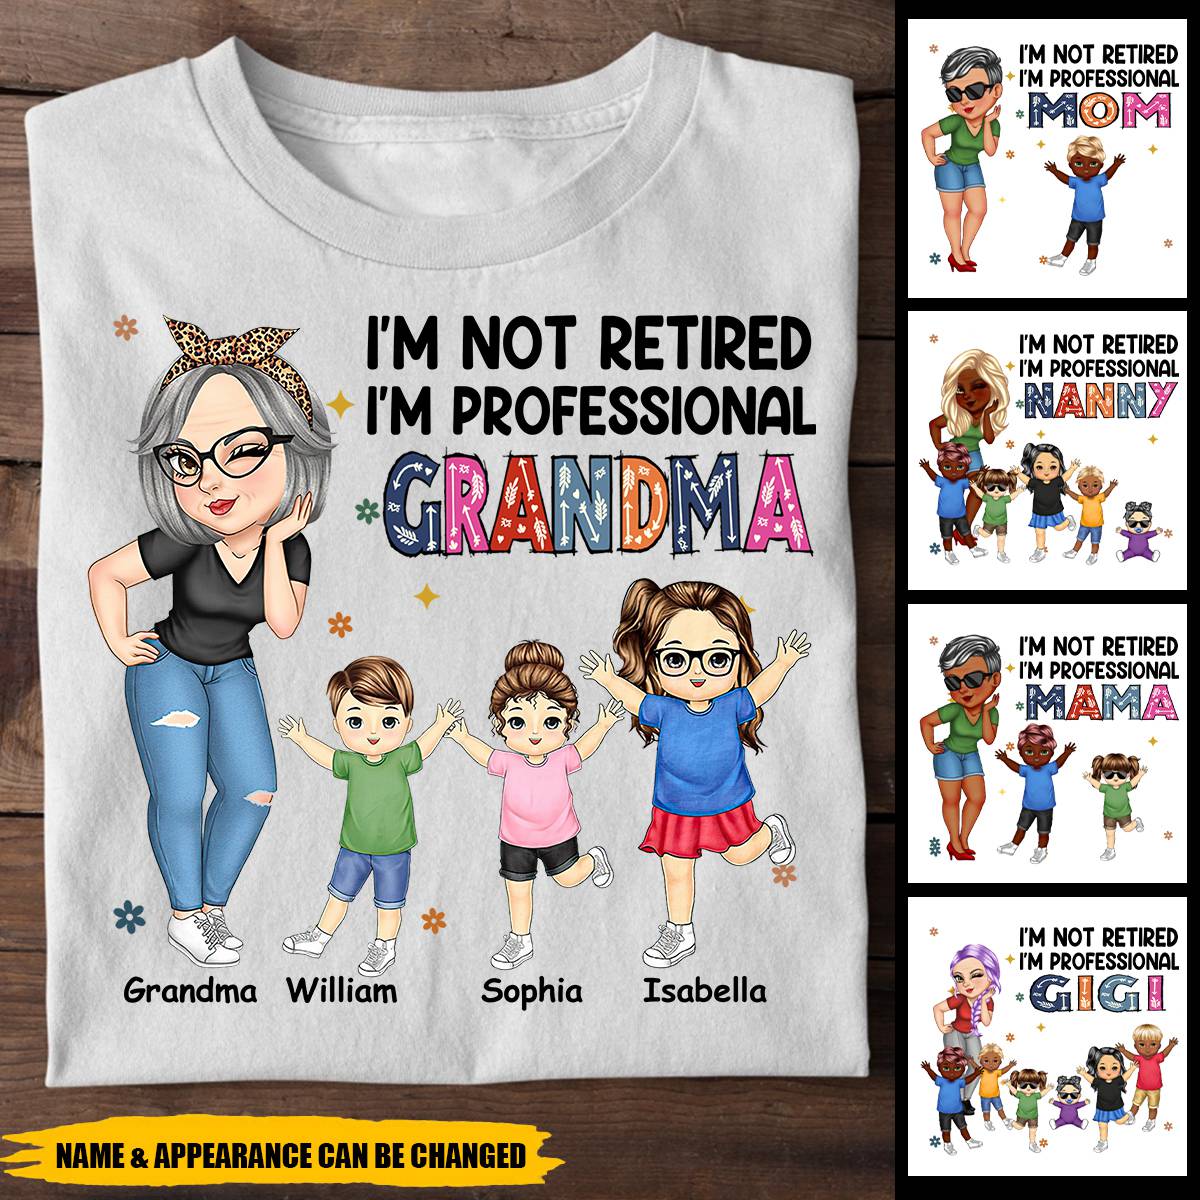 I'm A Professional Grandma - Funny, Retirement Gift For Grandma, Mom, Nana, Gigi - Personalized T-shirt